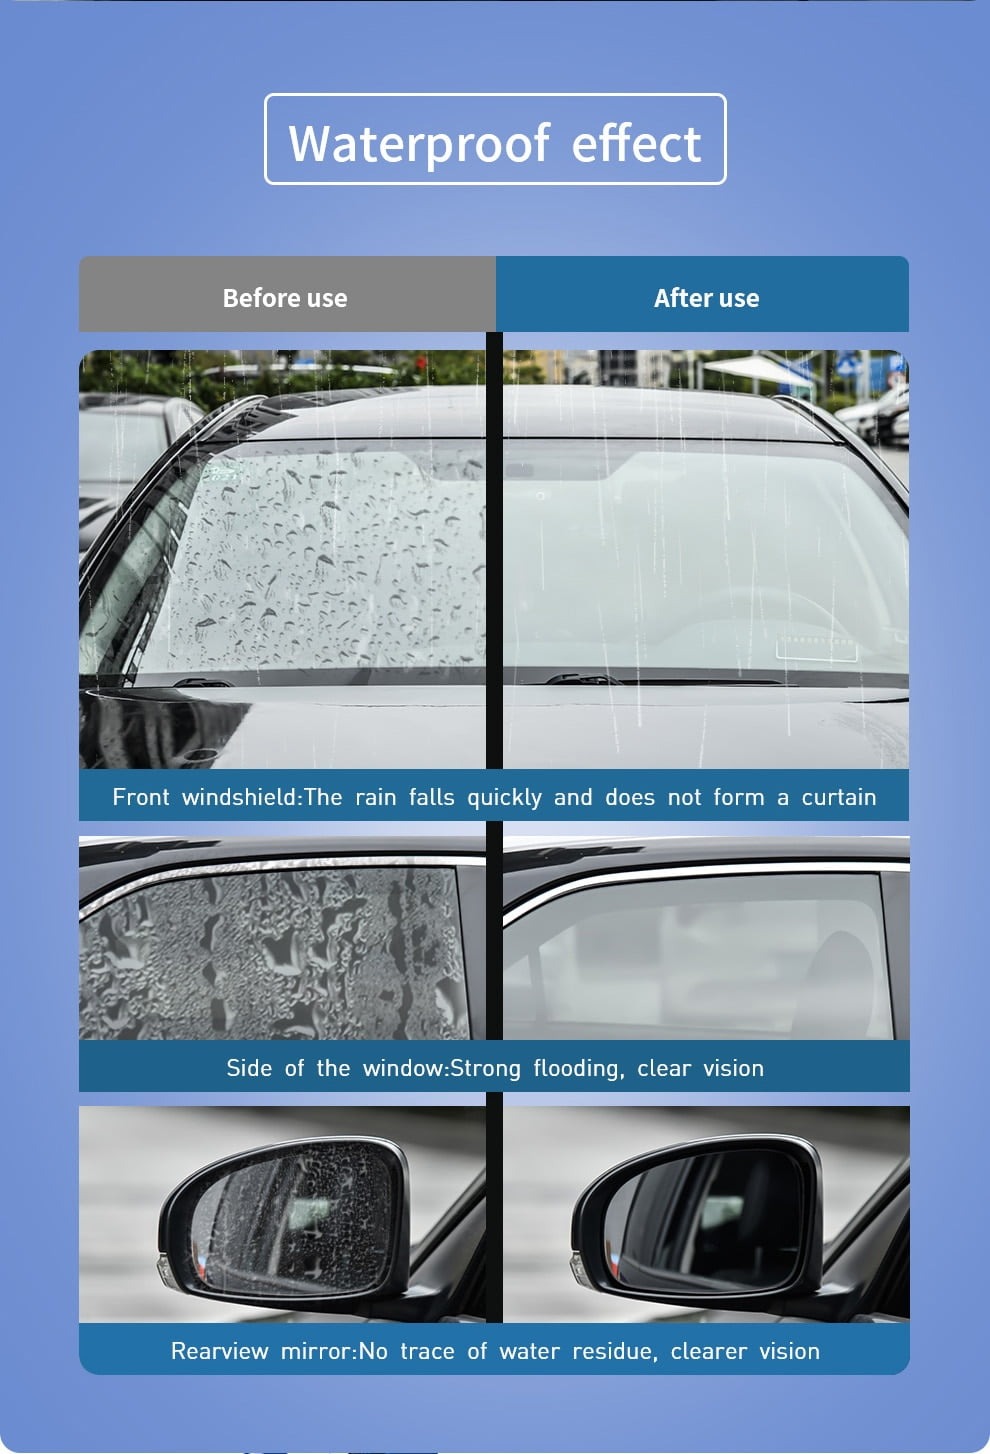 Baseus Car Rainproof Agent Window Glass Car Cleaner